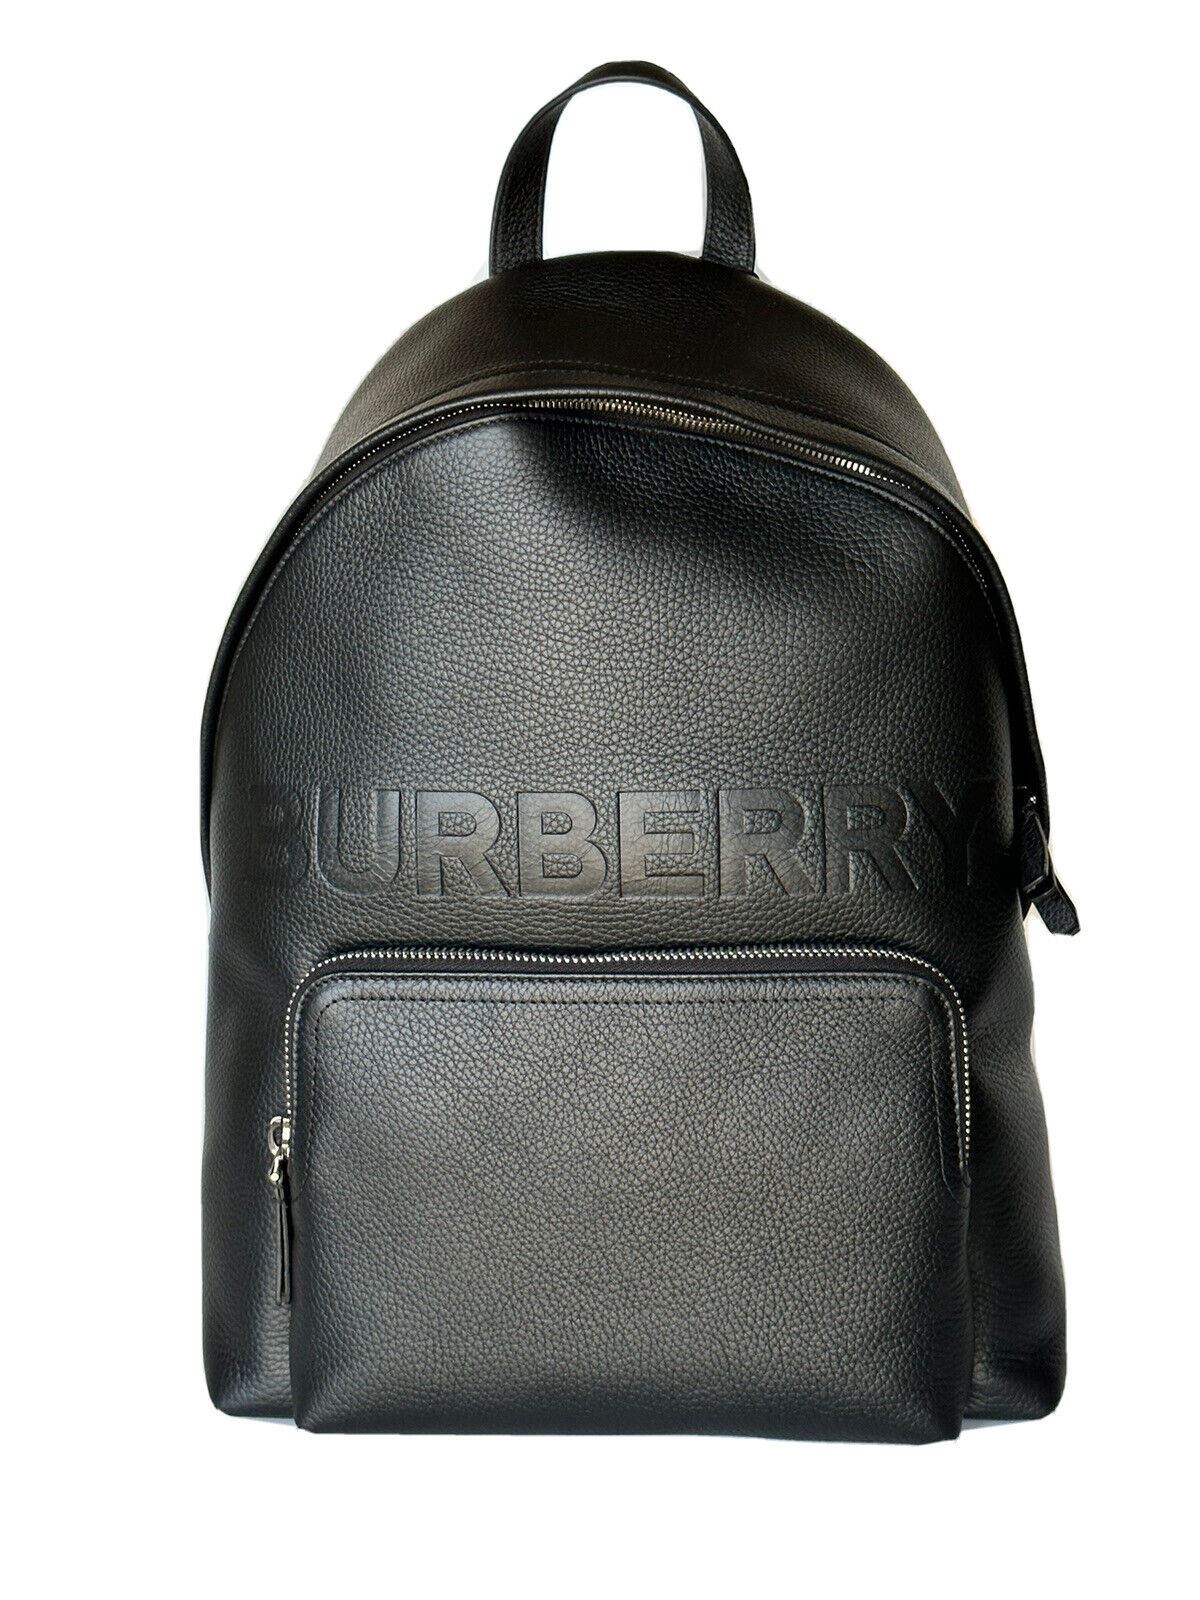 Neu mit Etikett: 1650 $ Burberry Abbeydale Leder-Logo-Rucksack Schwarz 80507631 